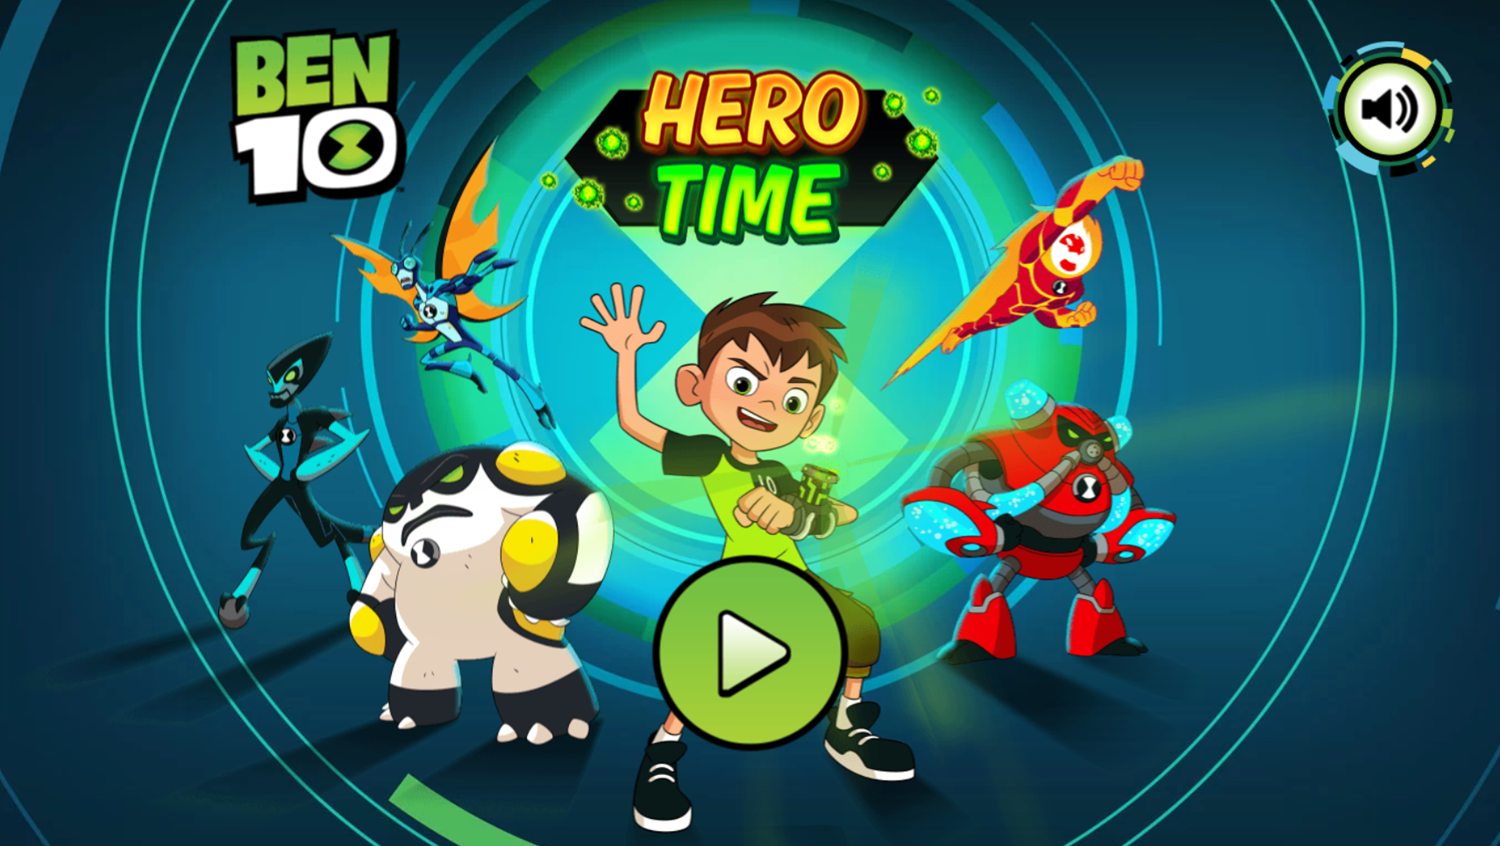 Ben 10 Hero Time Game Welcome Screen Screenshot.